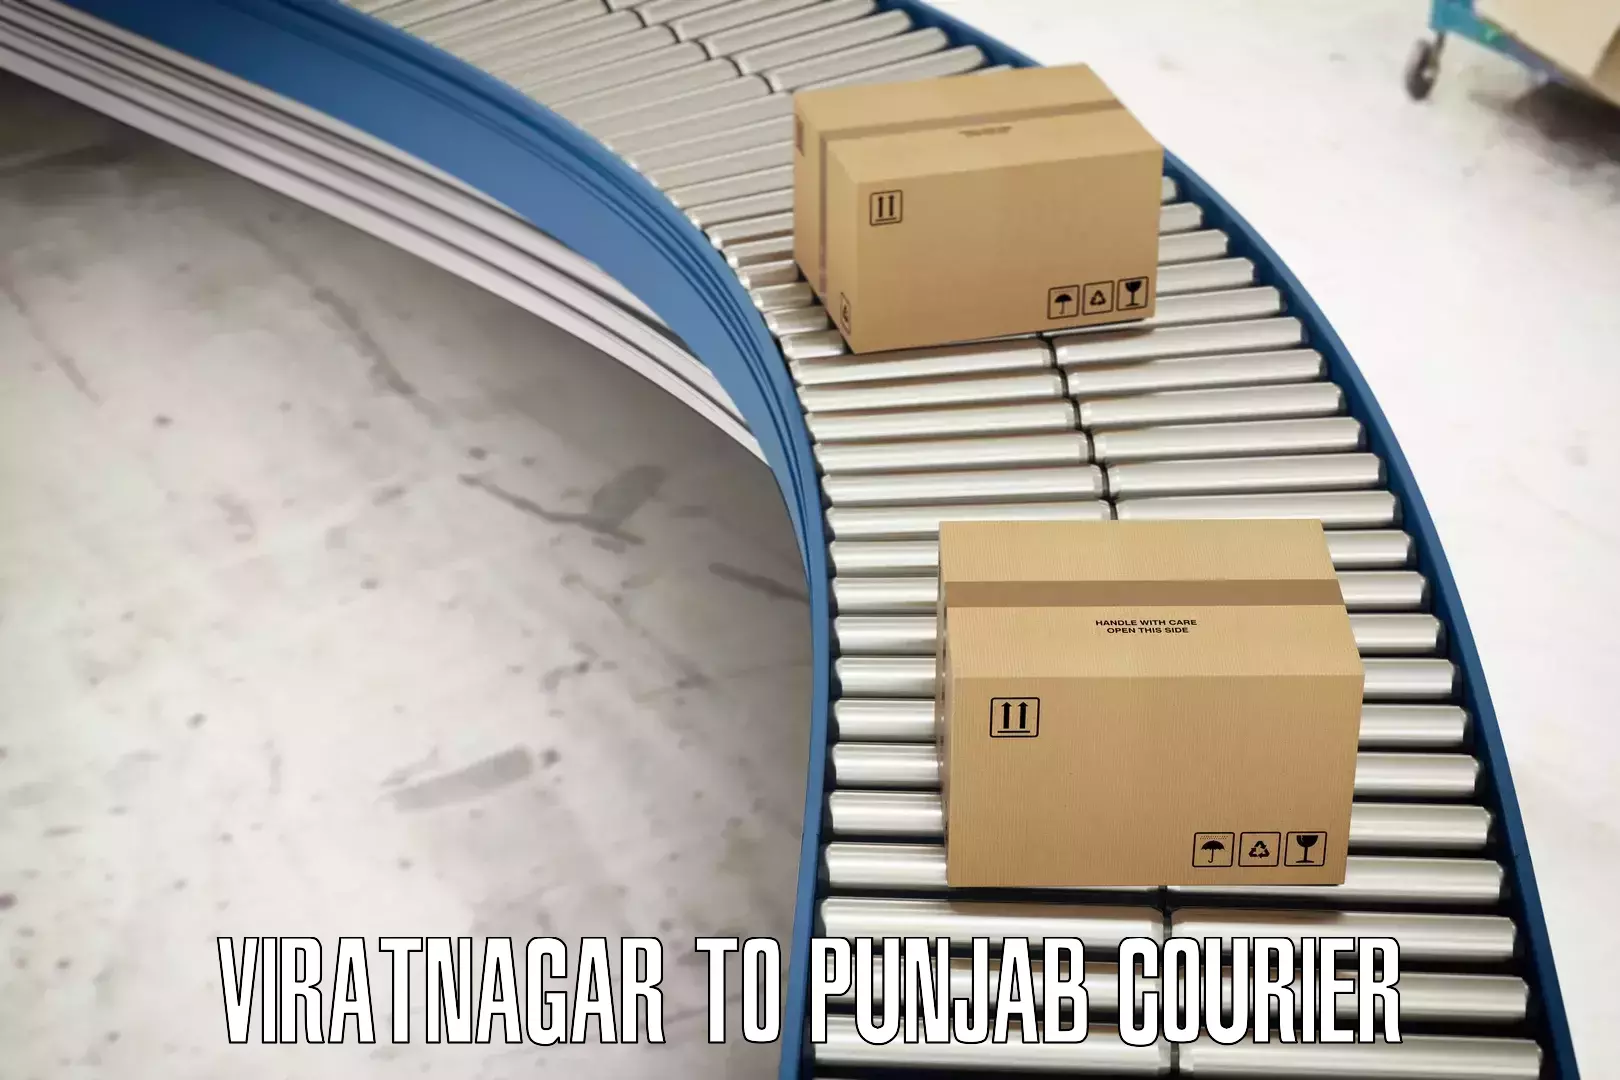 Local delivery service Viratnagar to Dinanagar